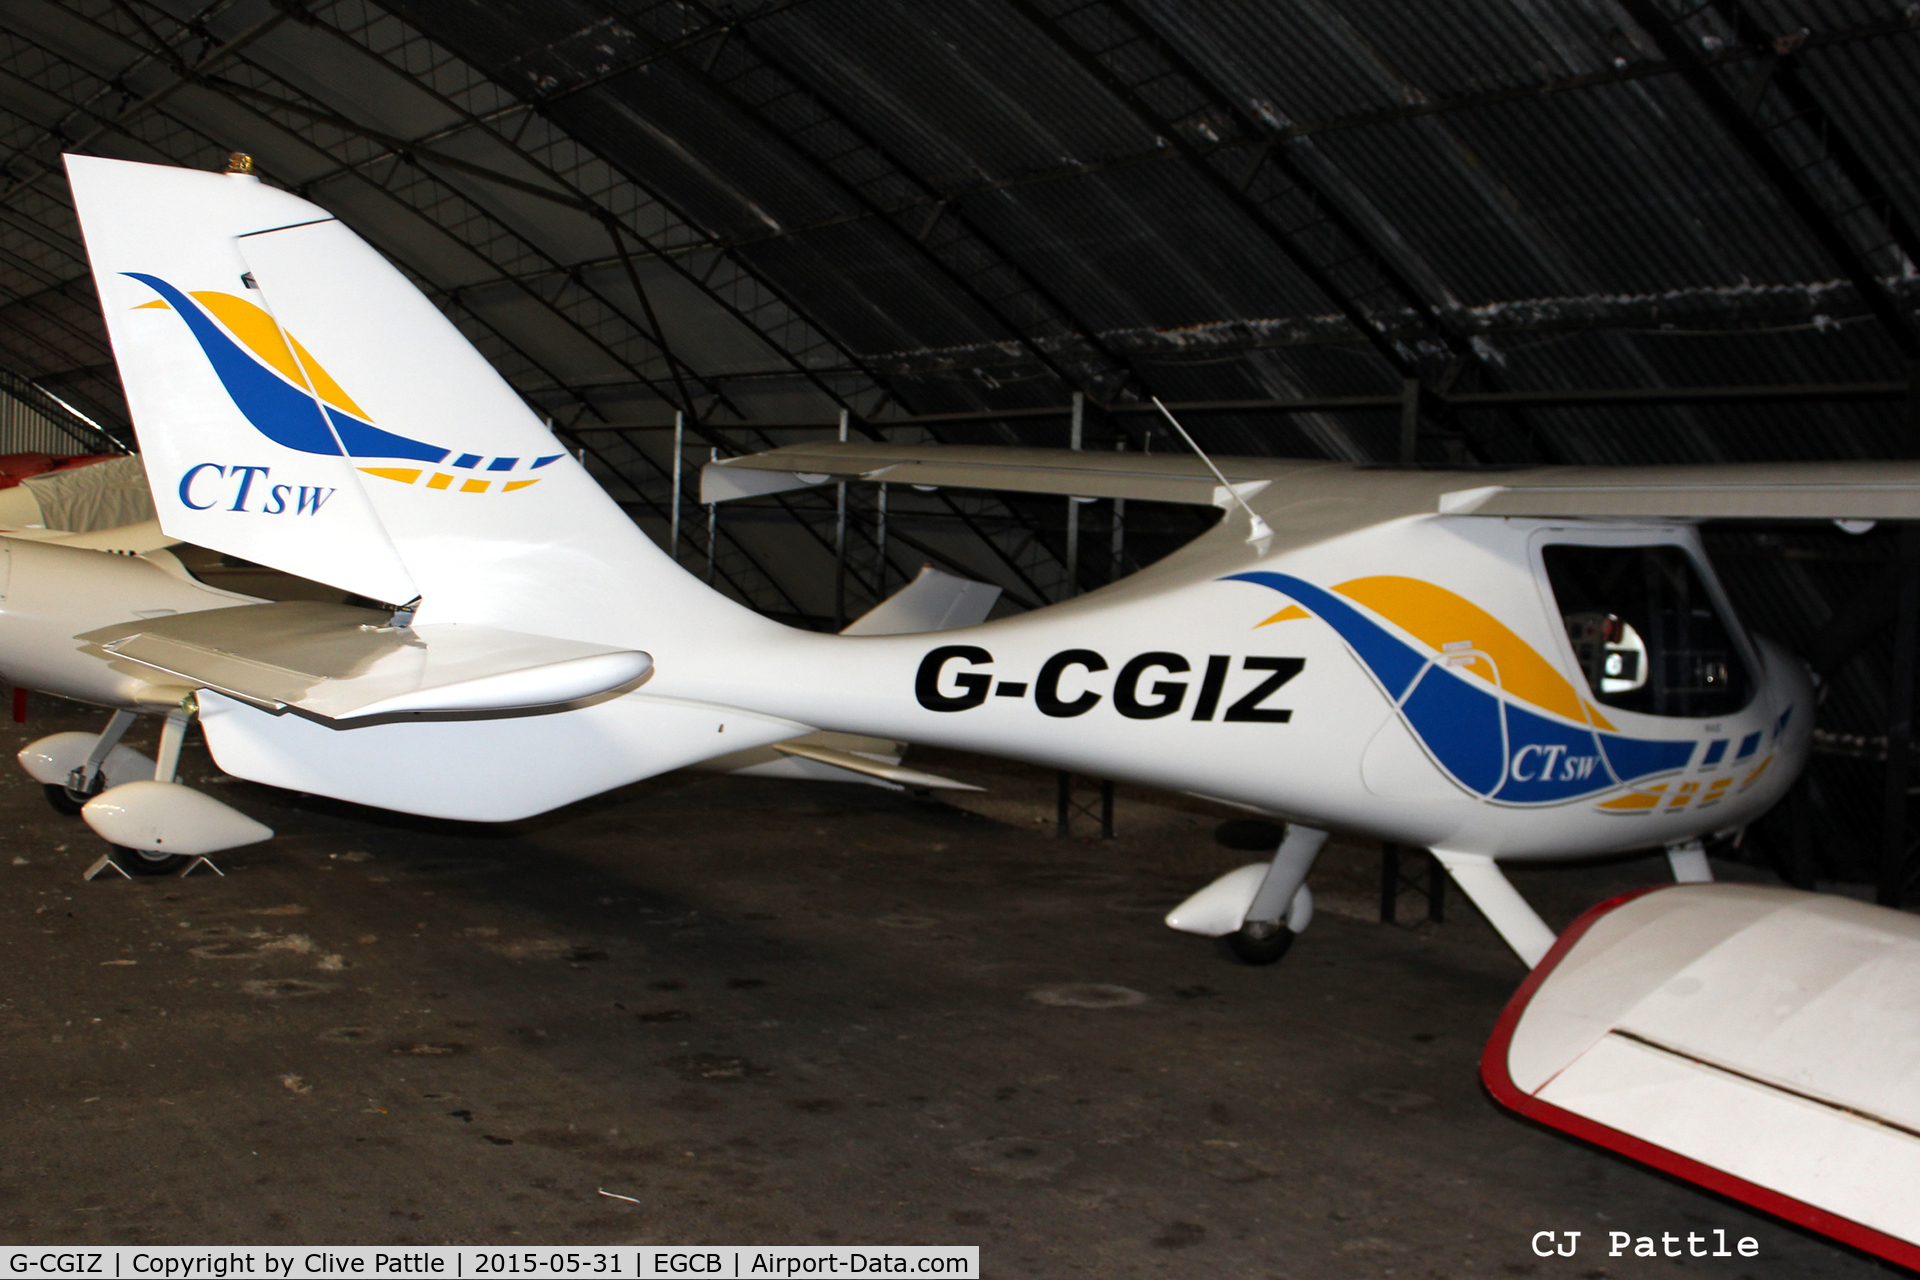 G-CGIZ, 2010 Flight Design CTSW C/N 8512, Hangared at Barton airfield, Manchester - EGCB